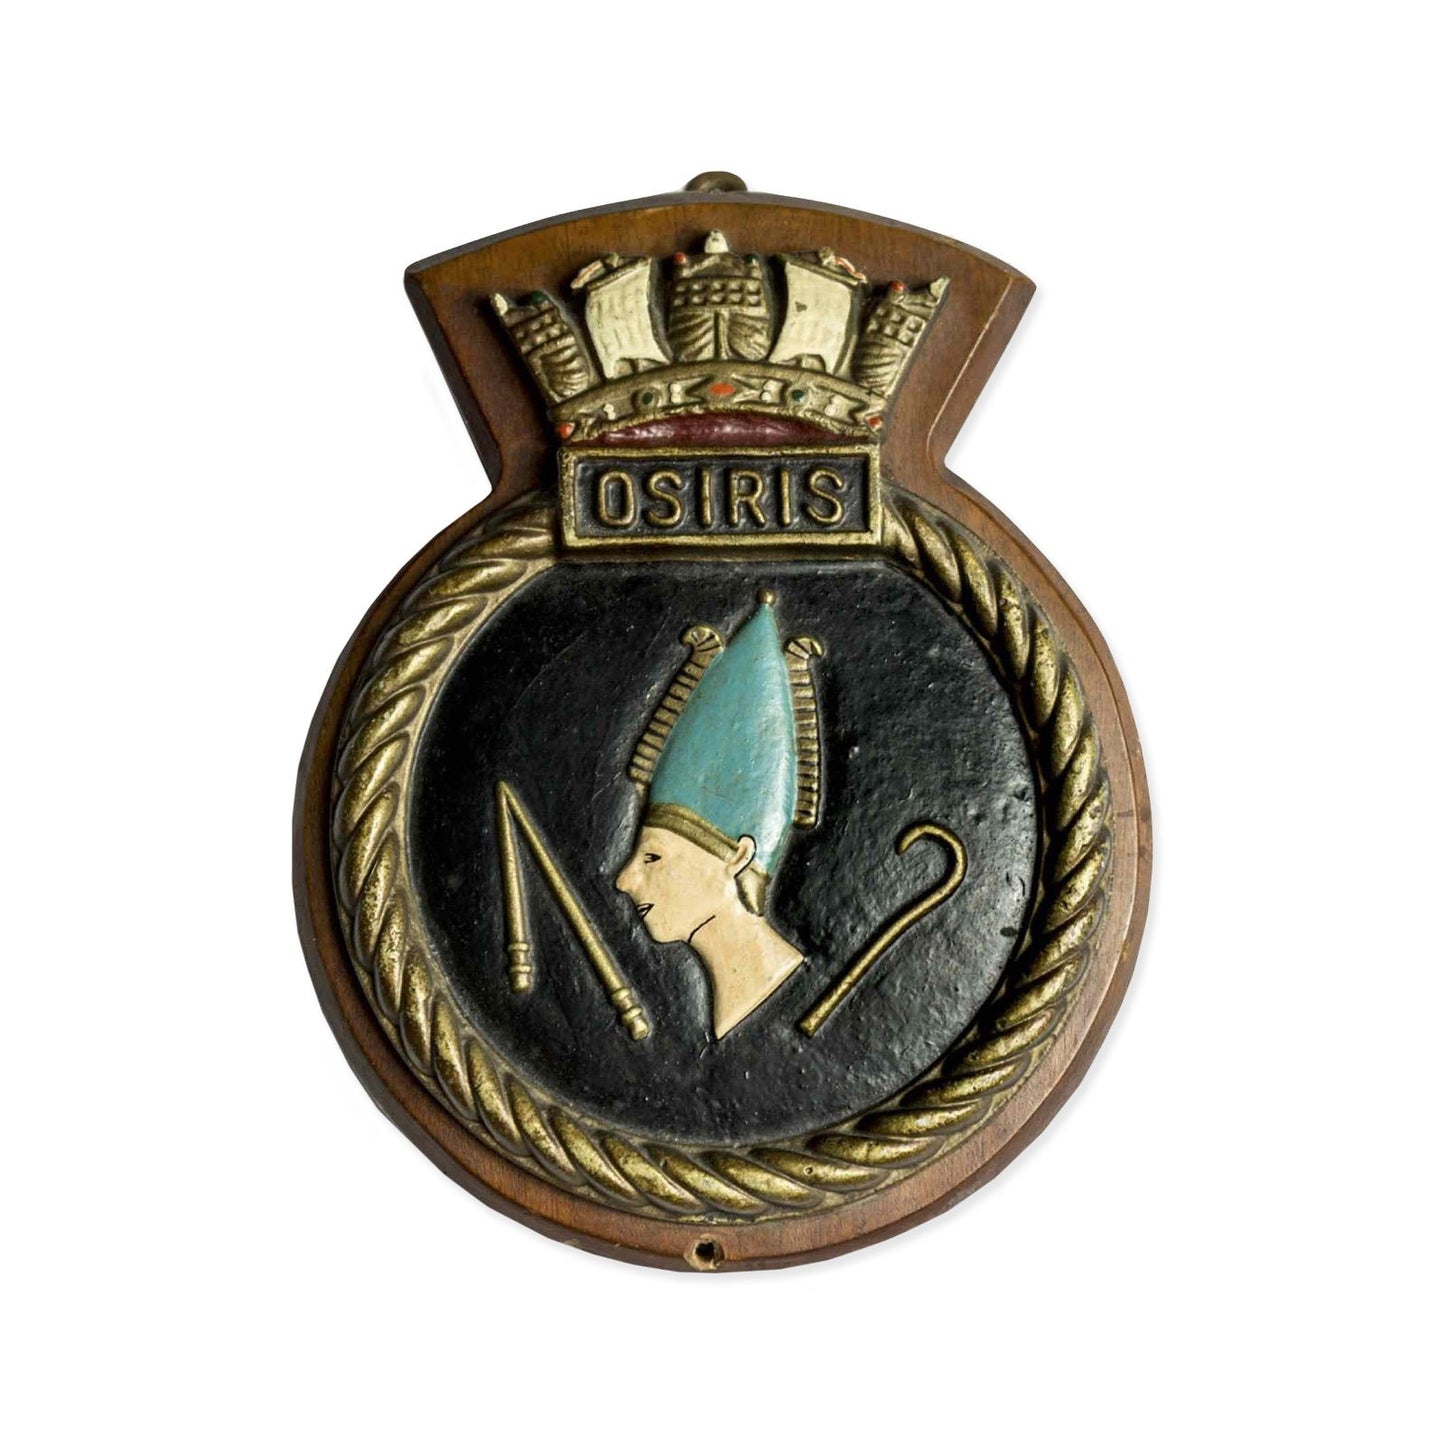 Royal Navy Ship's Badge From The H.M.S. Osiris